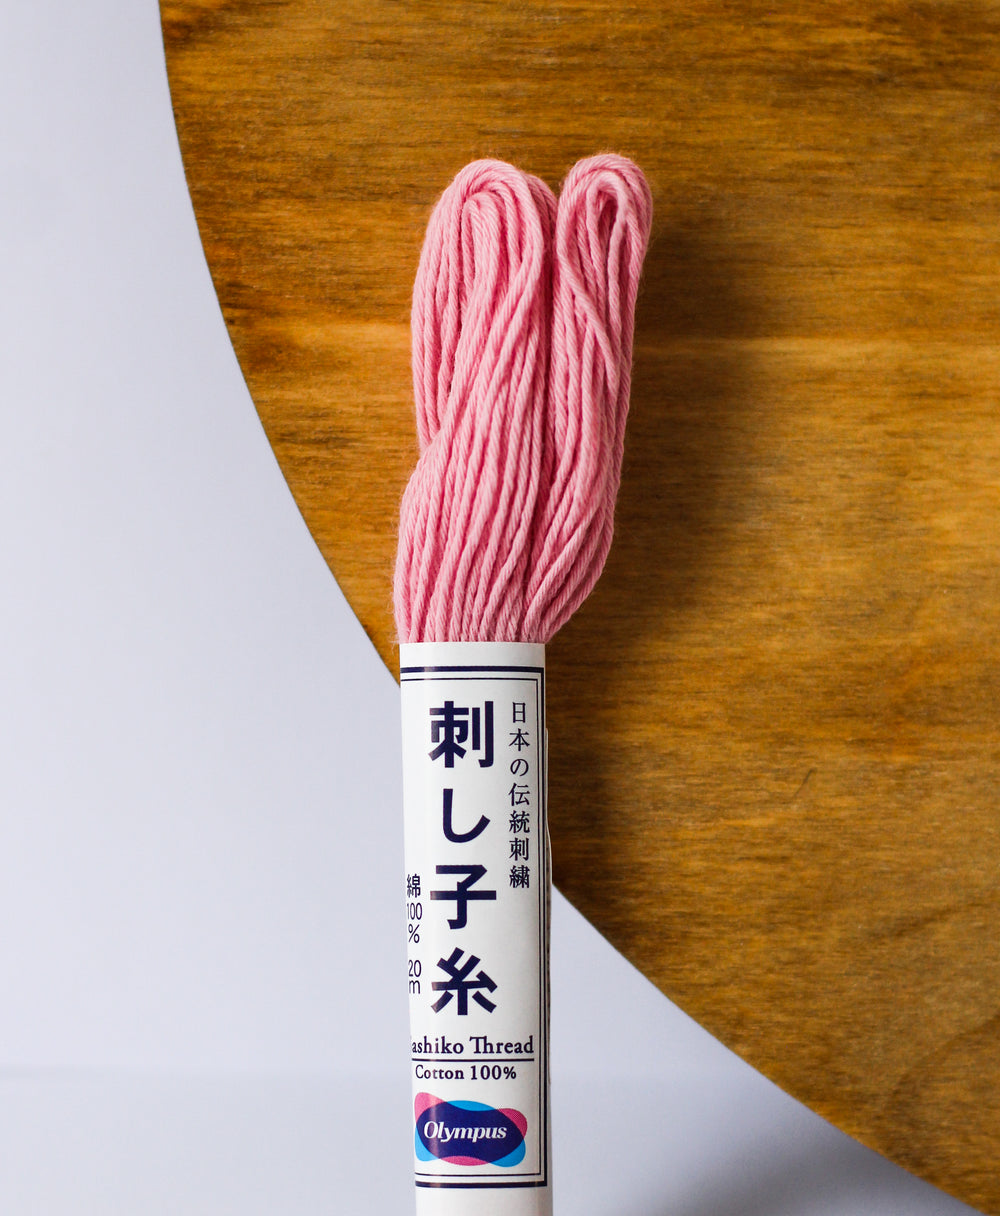 Sashiko Thread: Solid Colours